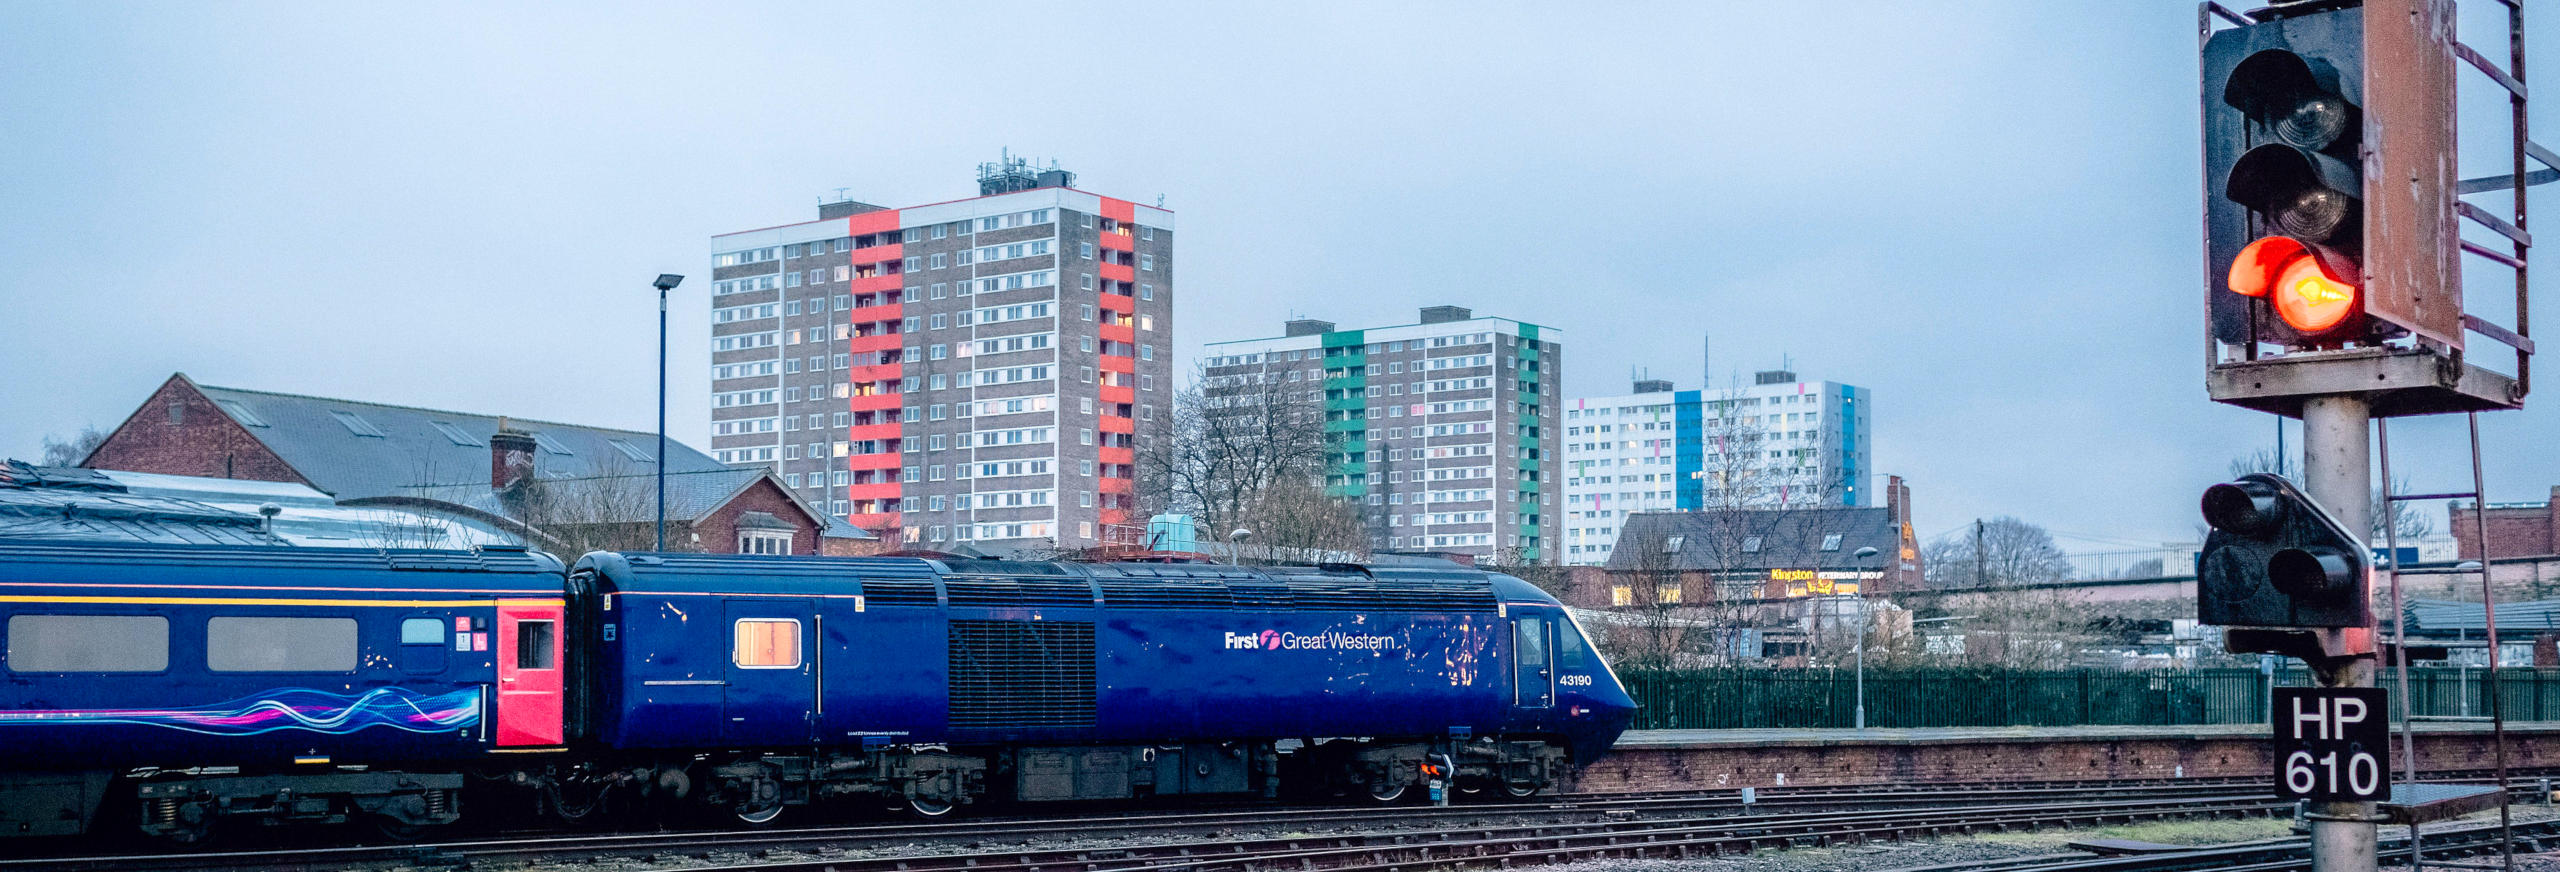 HST joins Hull Trains fleet